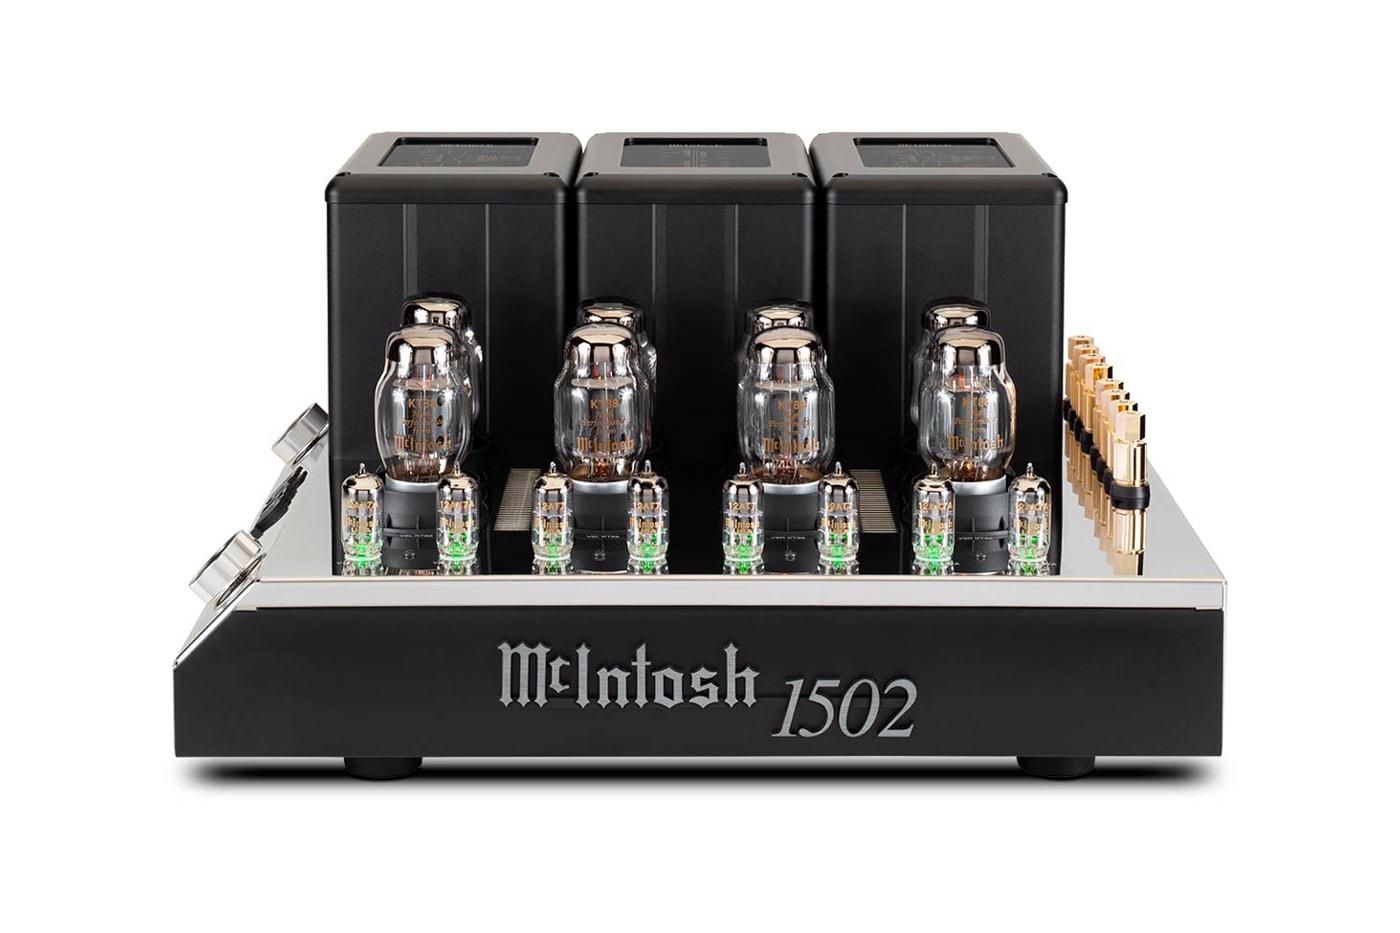 McIntosh New MC1502 Vacuum Tube Amp Was Made for Serious Audiophiles audiophile MC275 MC2152 home audio pre-amp sound McIntosh Lab